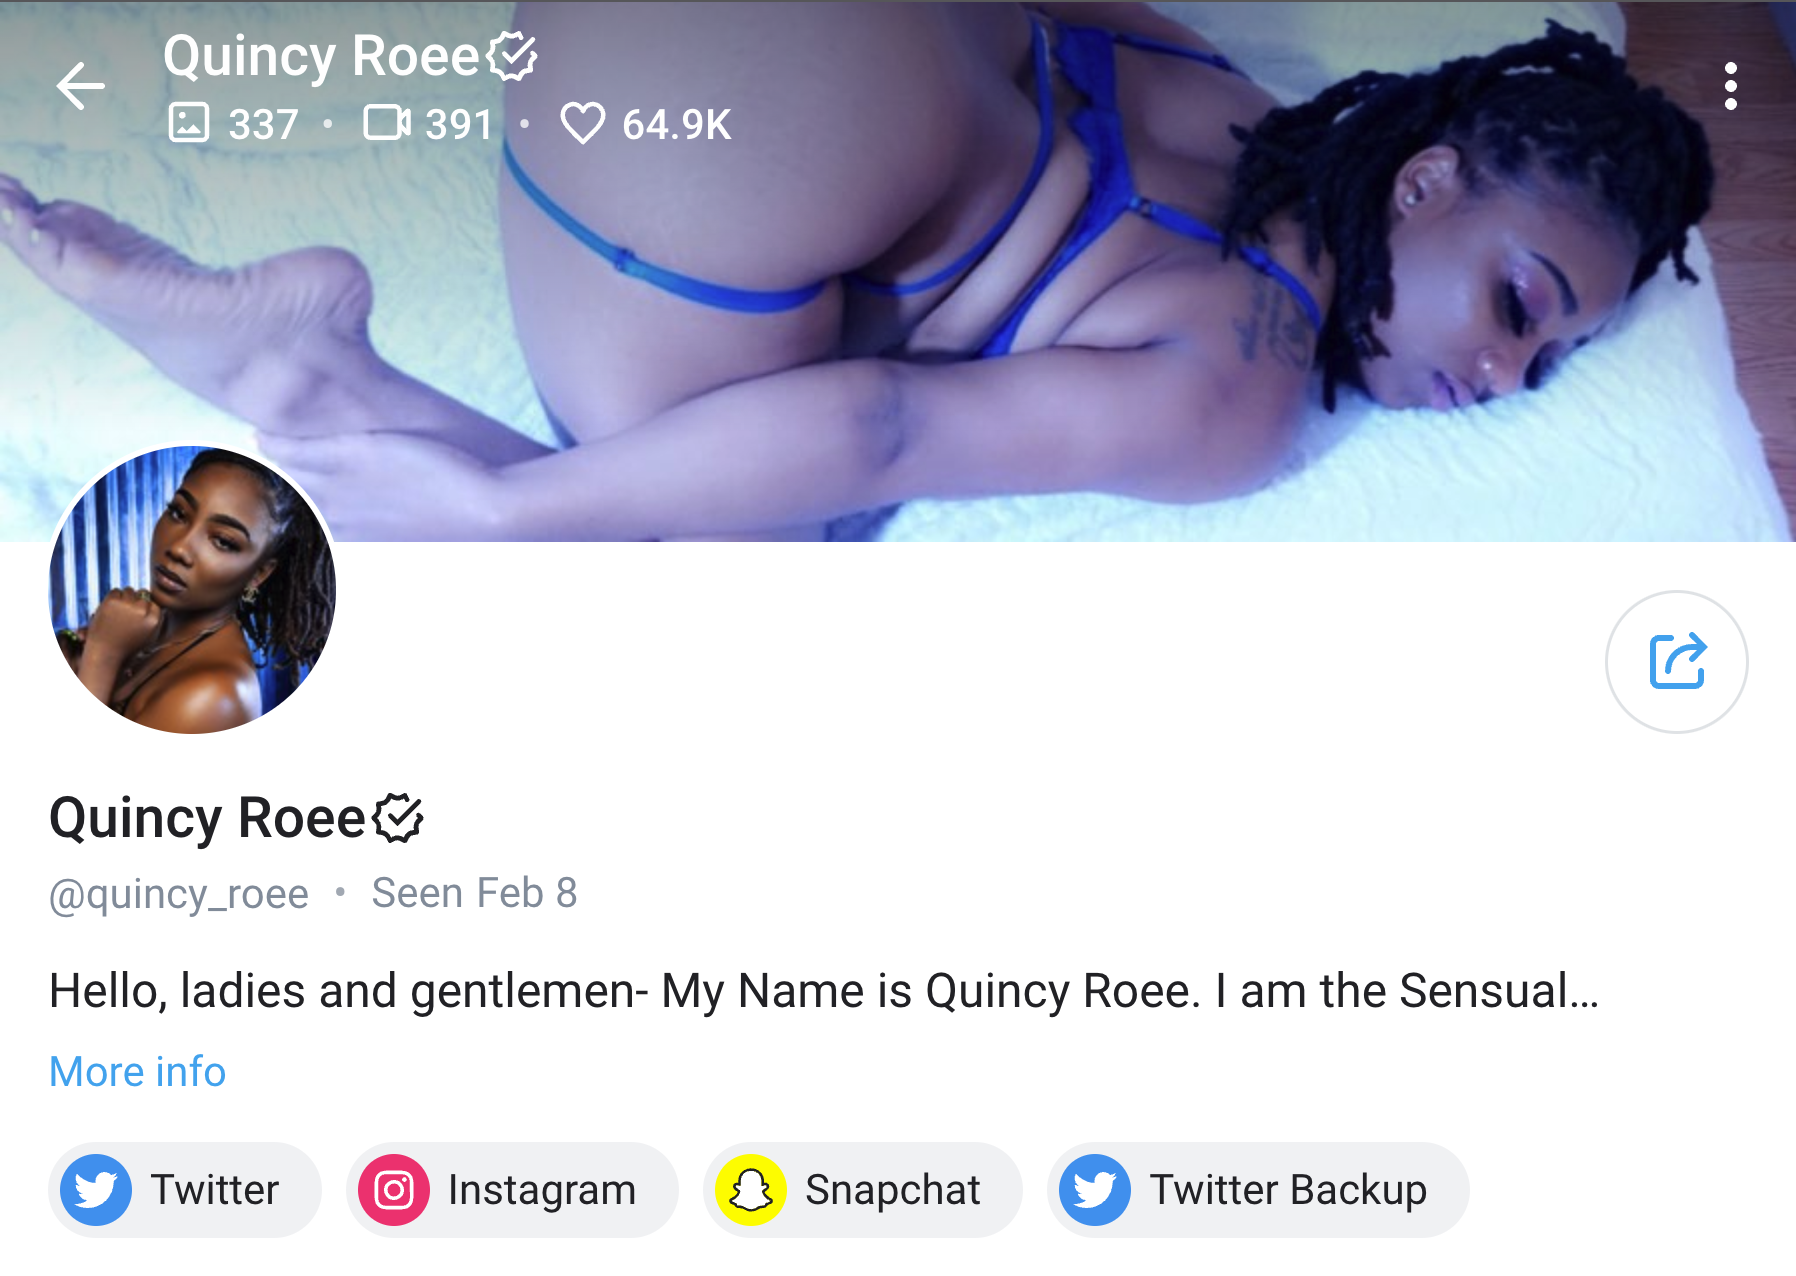 chinzorigt munkhtsetseg share ebony nude snapchat names photos